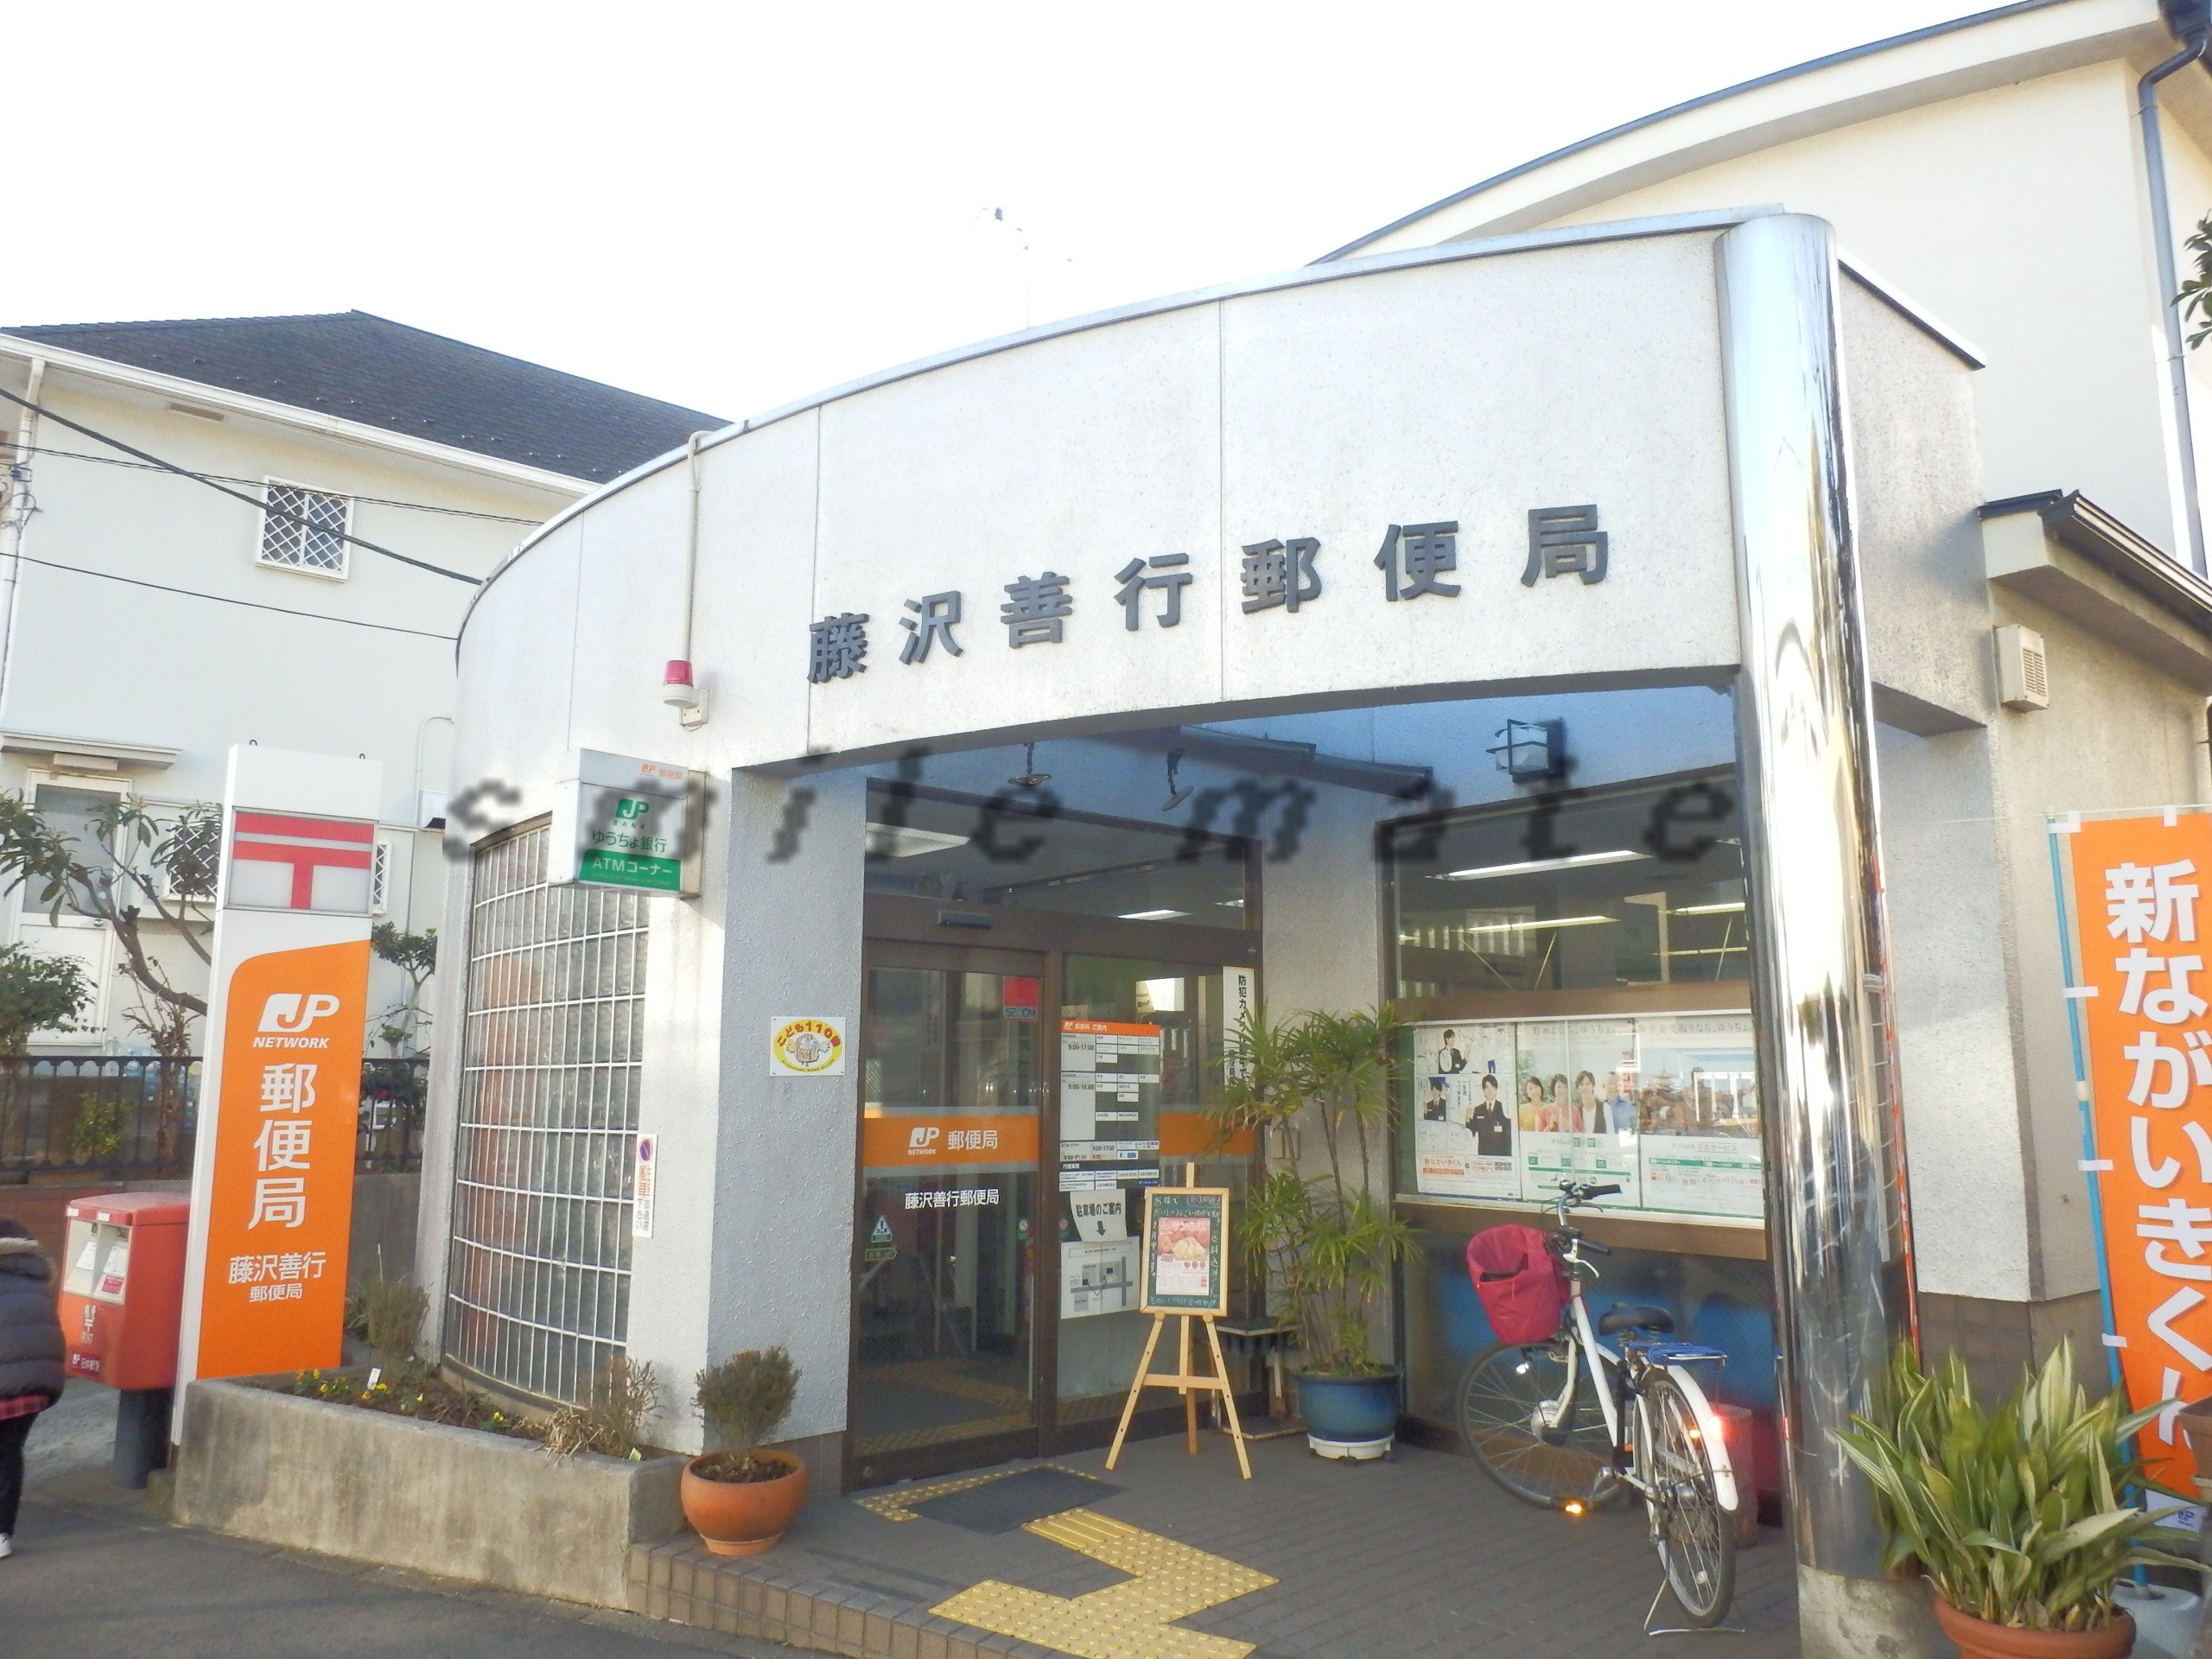 post office. 1082m to Fujisawa good deeds post office (post office)